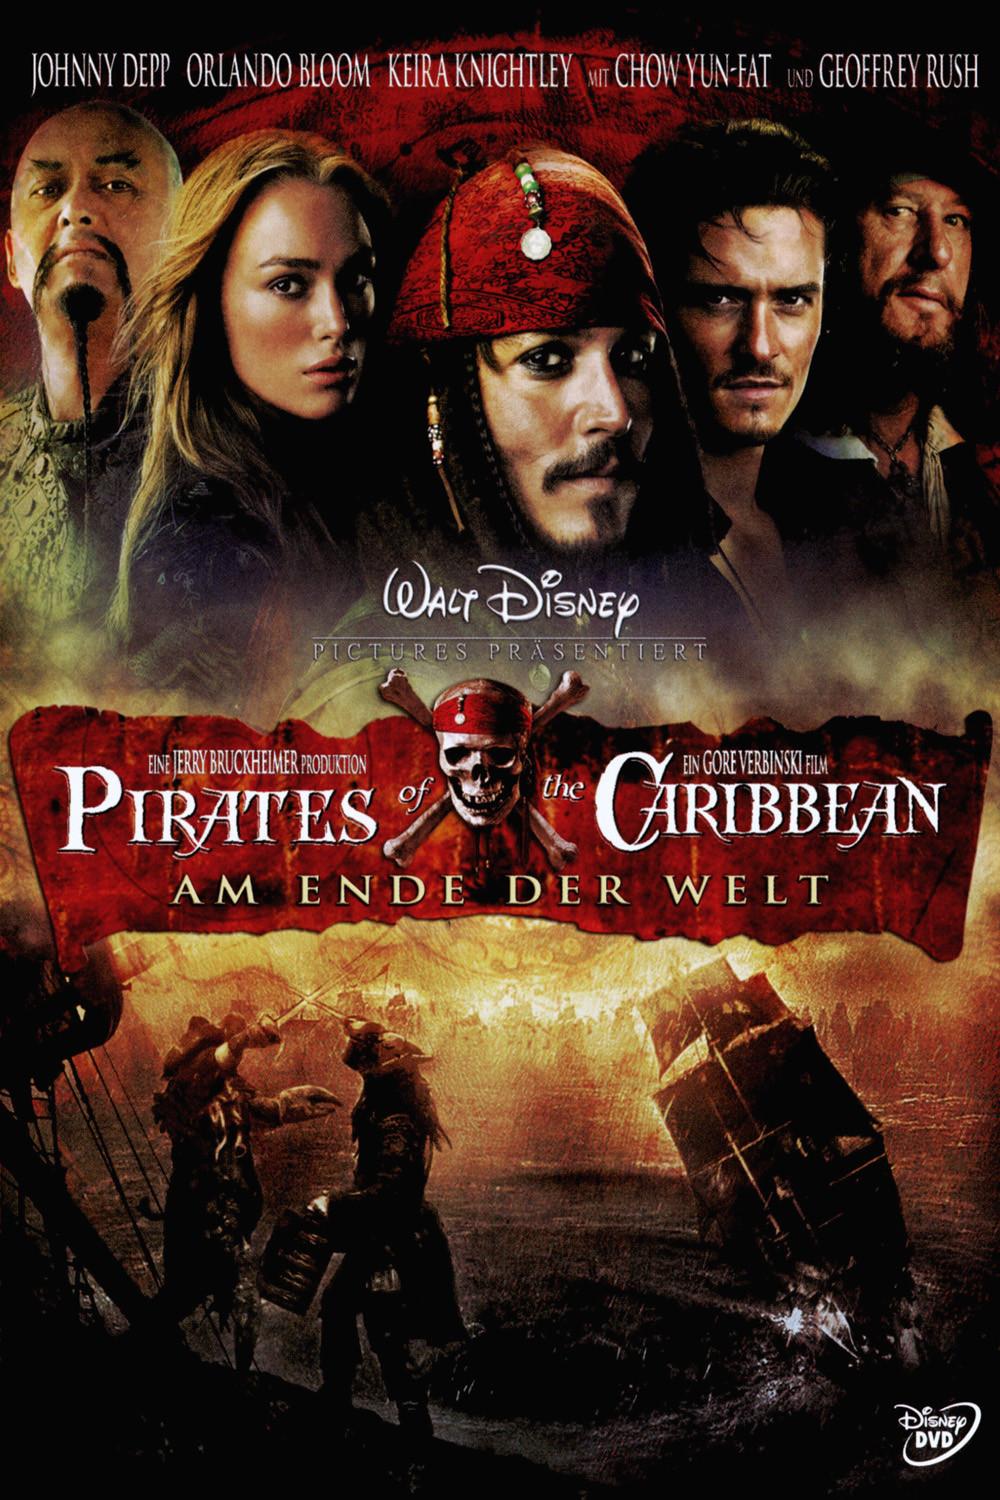 download film pirates 2005 indowebster